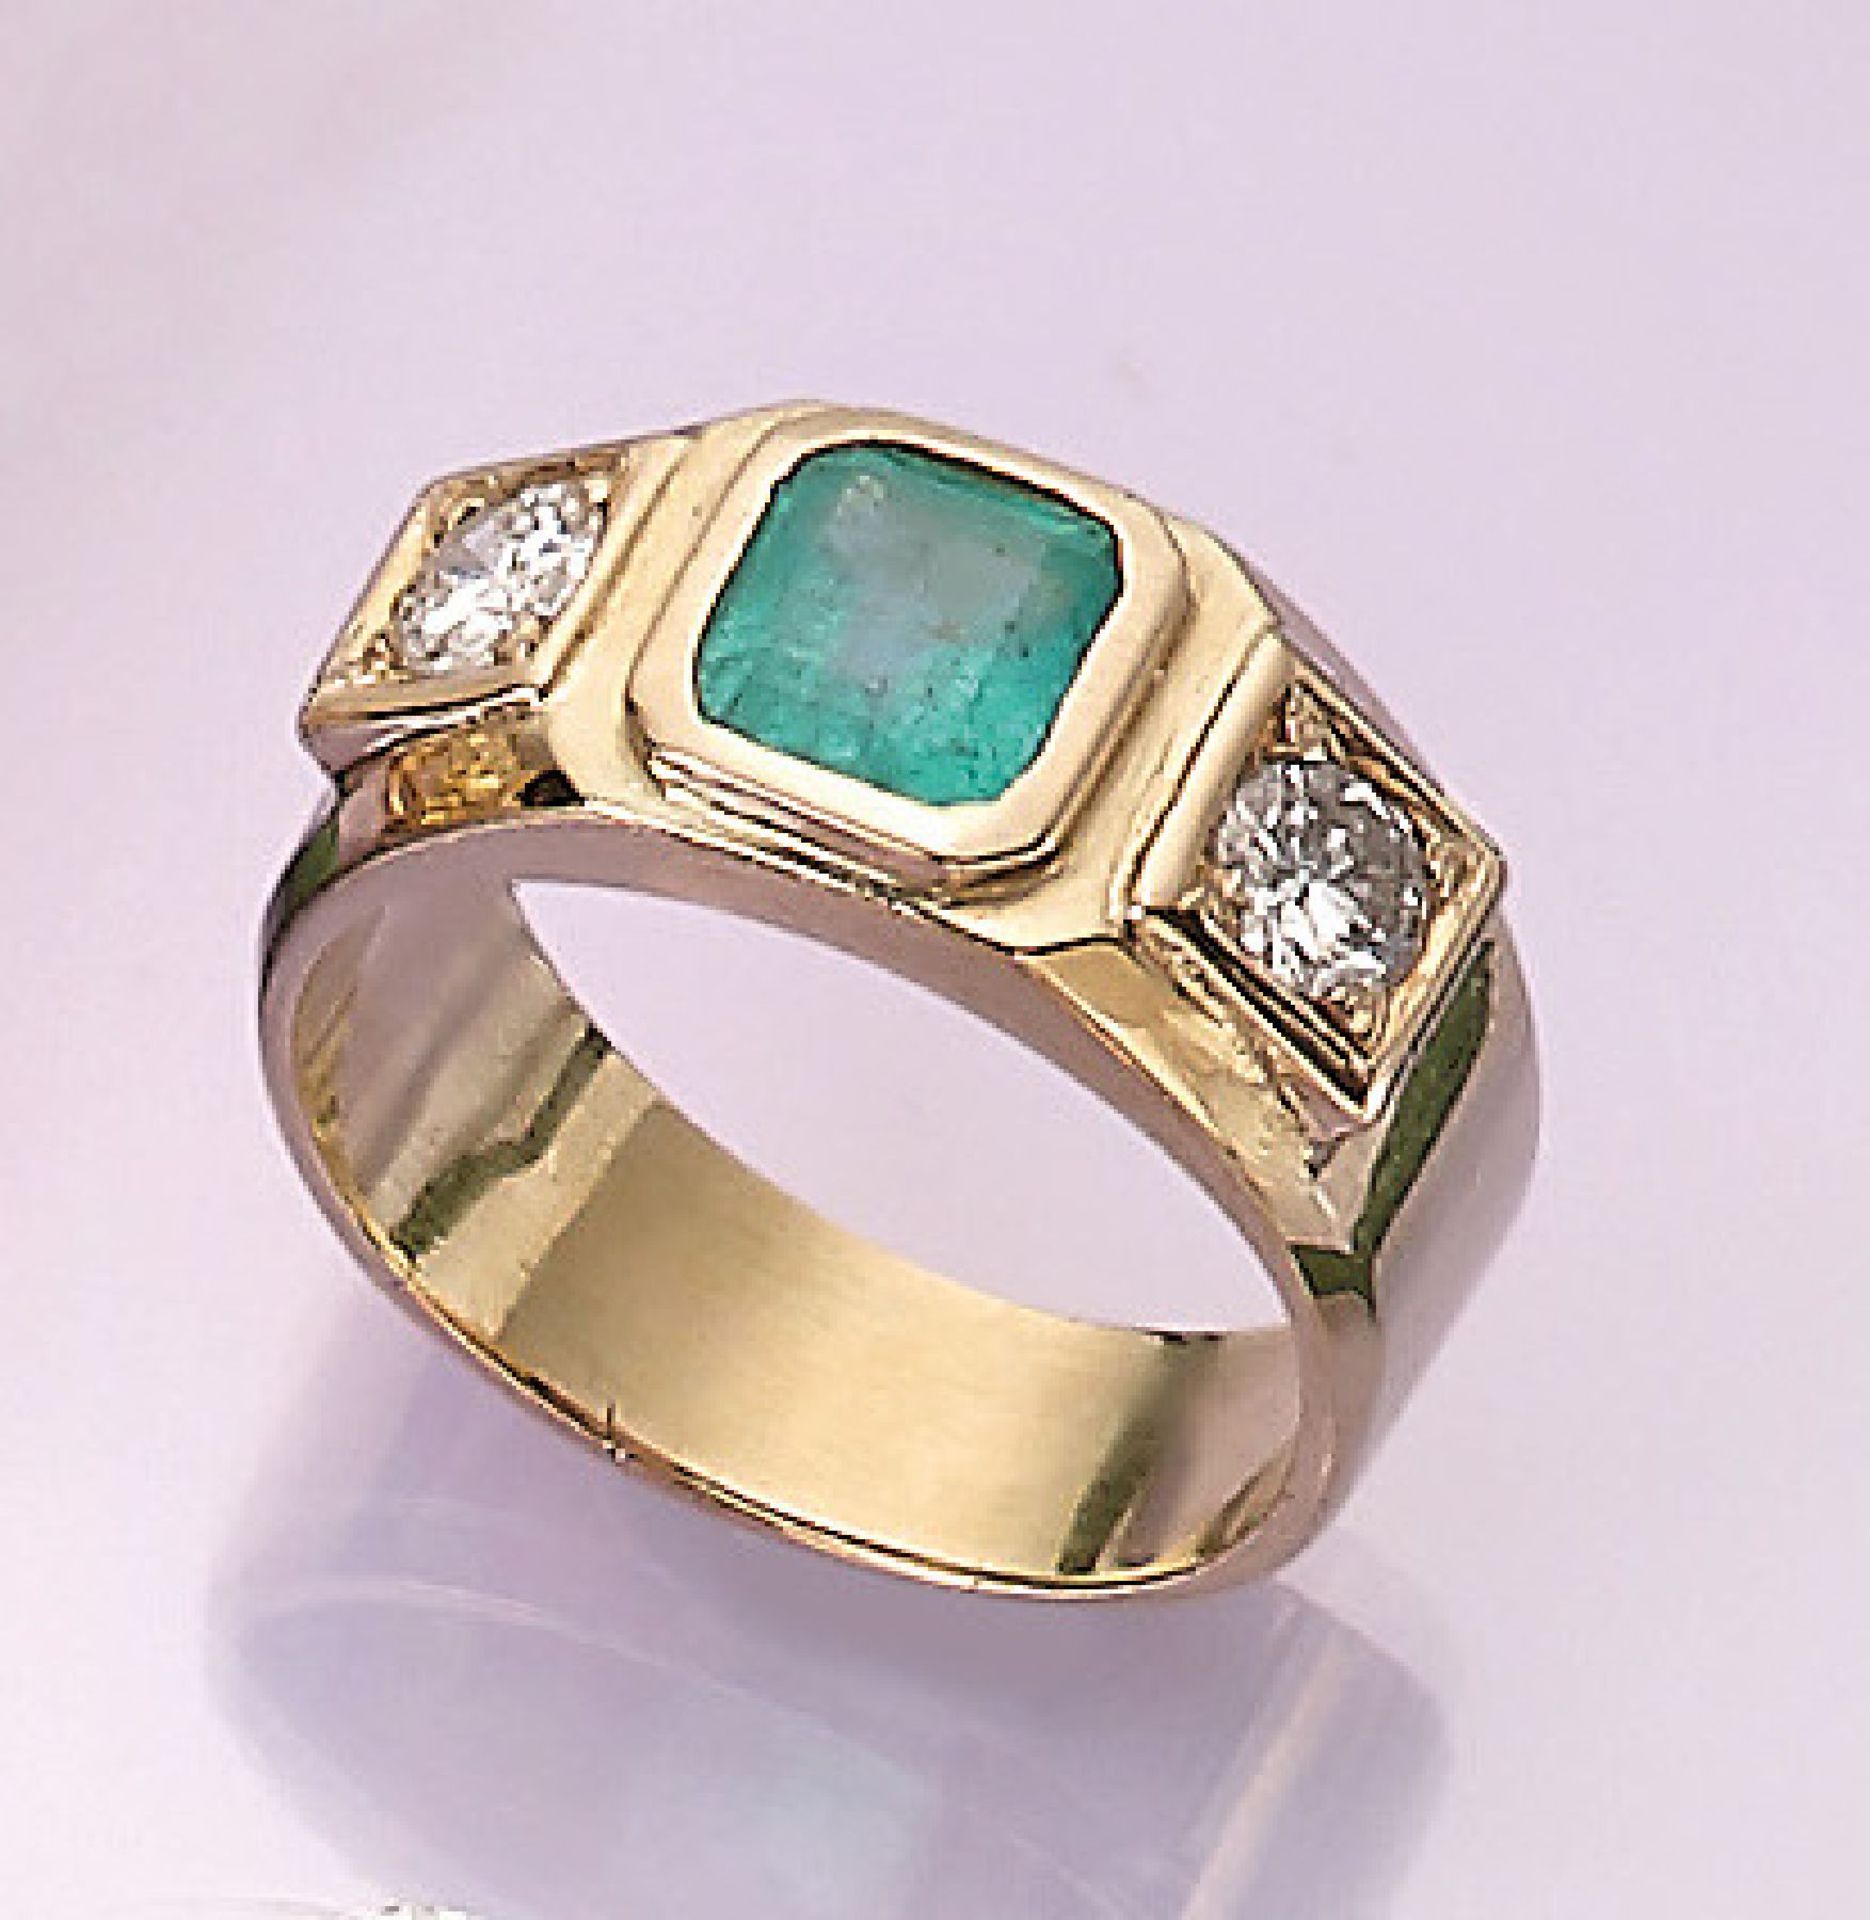 14 kt Gold Ring mit Smaragd und Brillanten ,GG 585/000, facett. Smaragd im Emerald-Cut ca.2.30 ct, 2